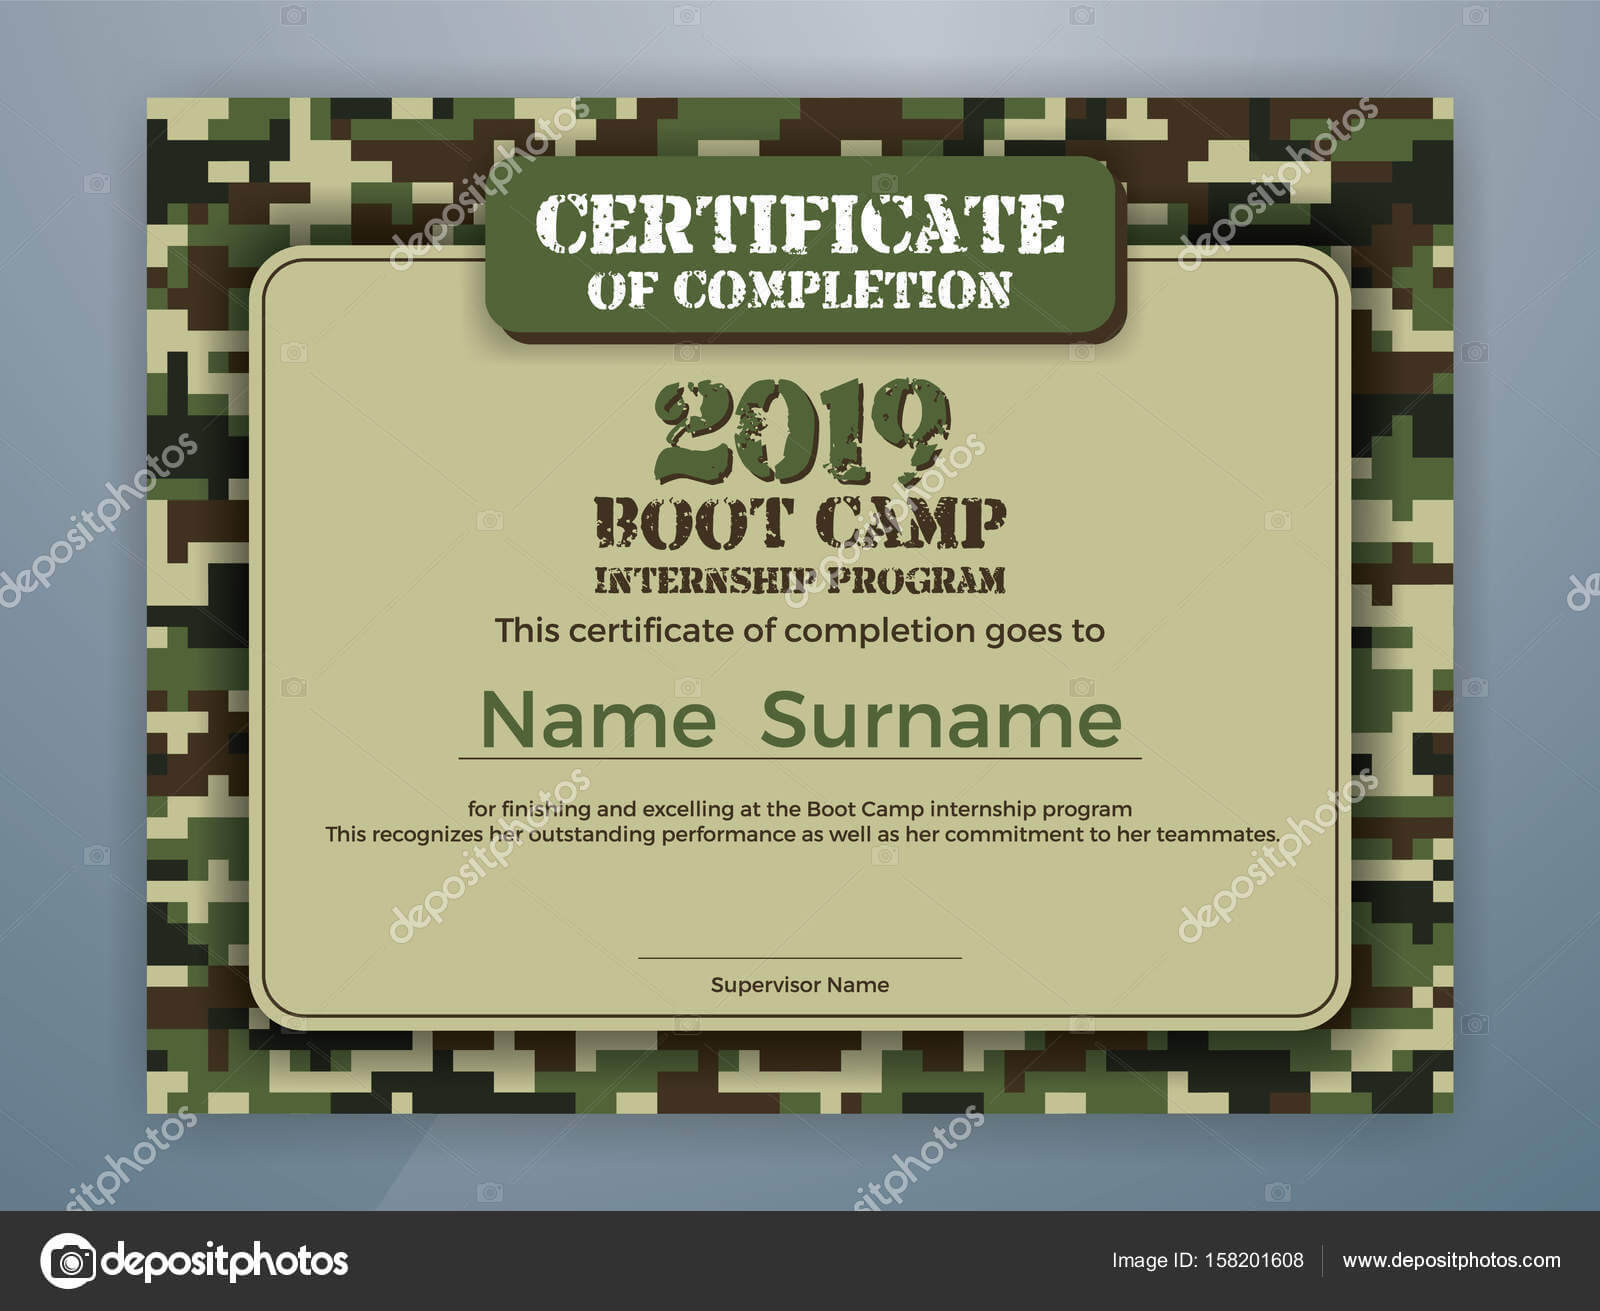 Boot Camp Certificate Template | Boot Camp Internship With Boot Camp Certificate Template